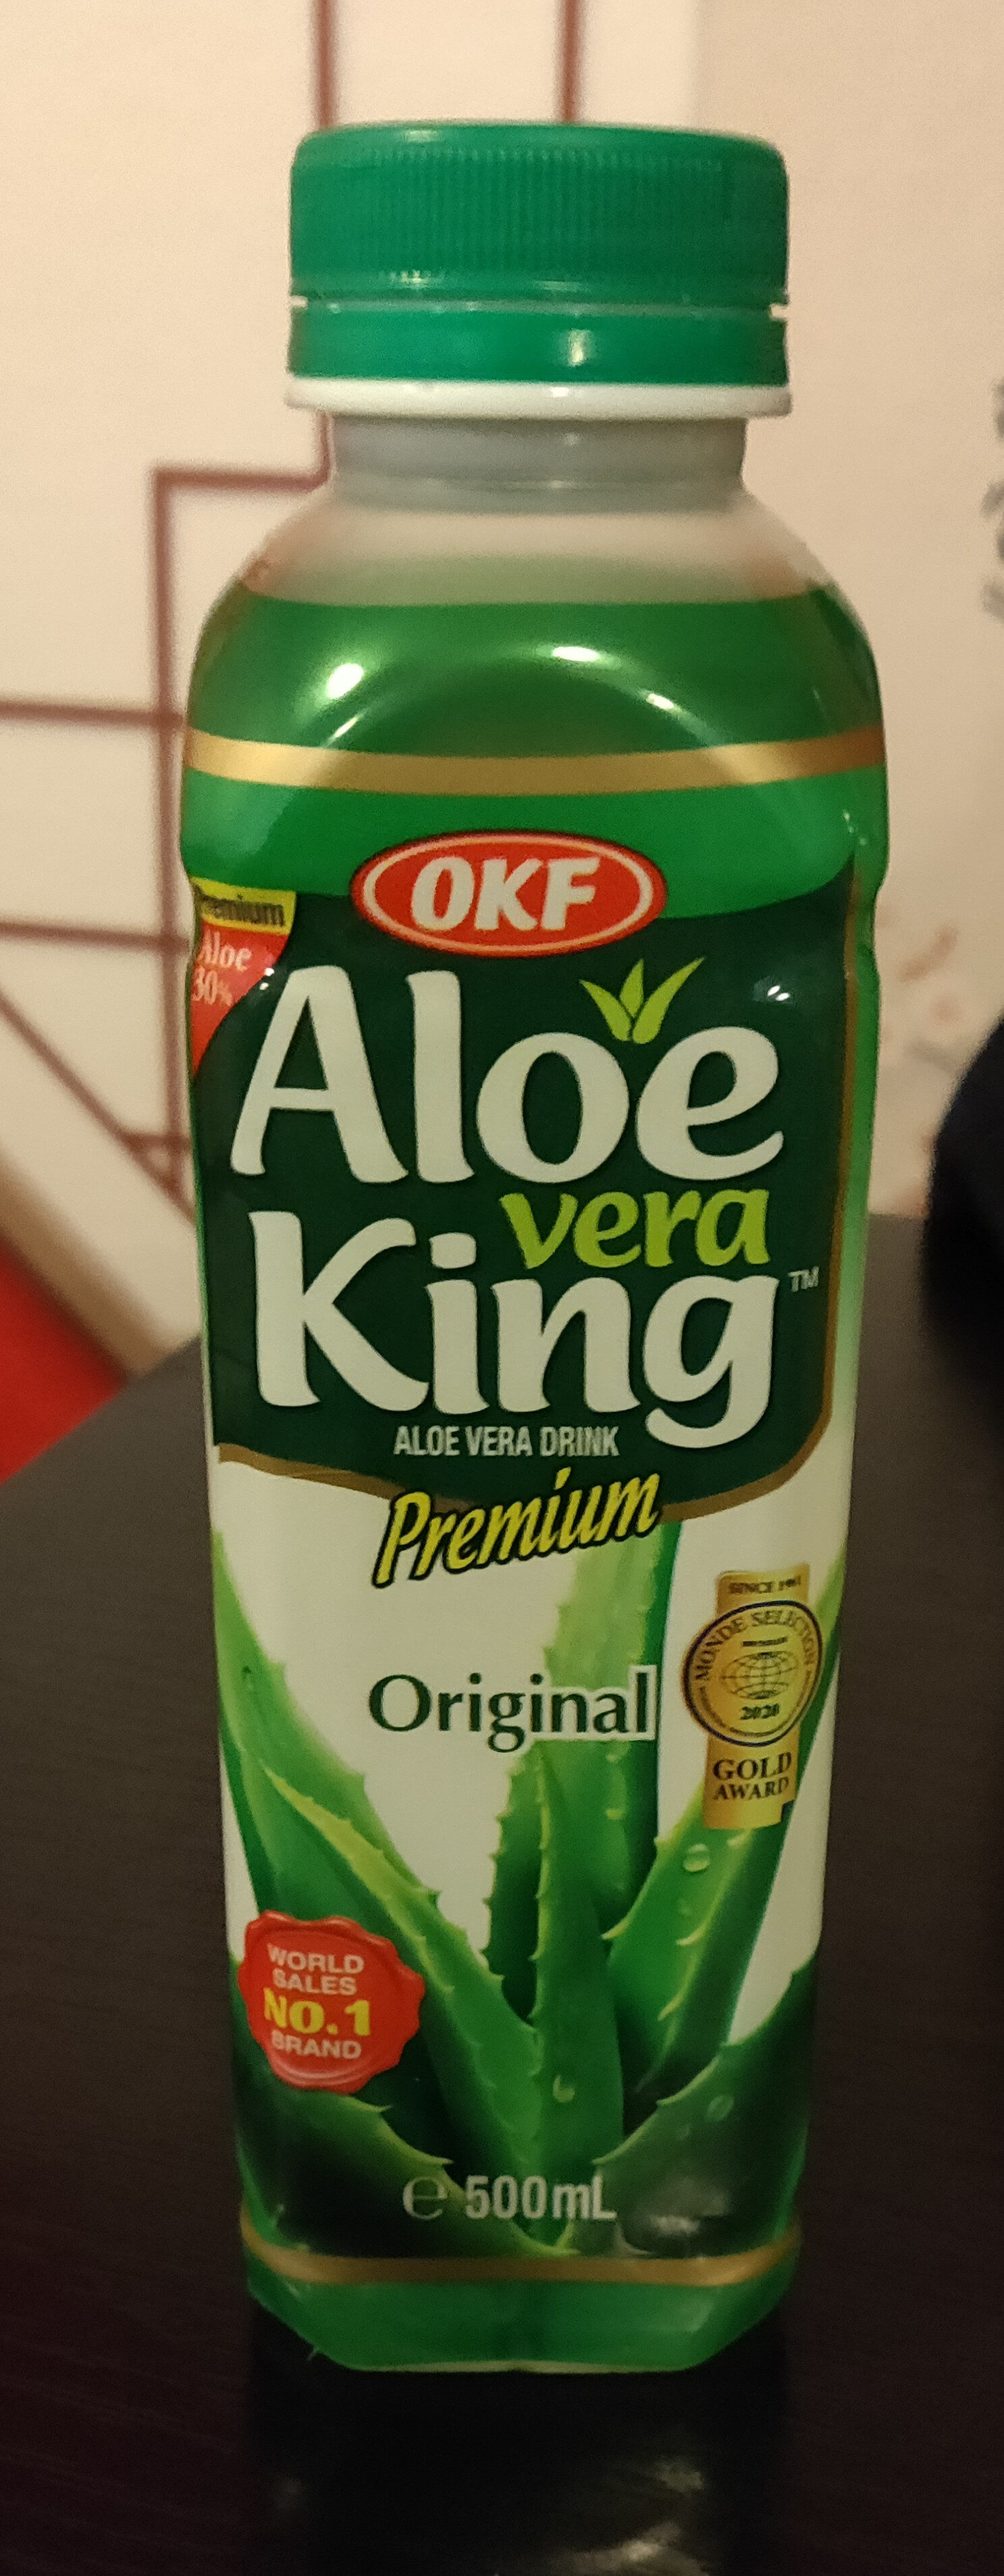 OKF Aloe Vera King - Product - en